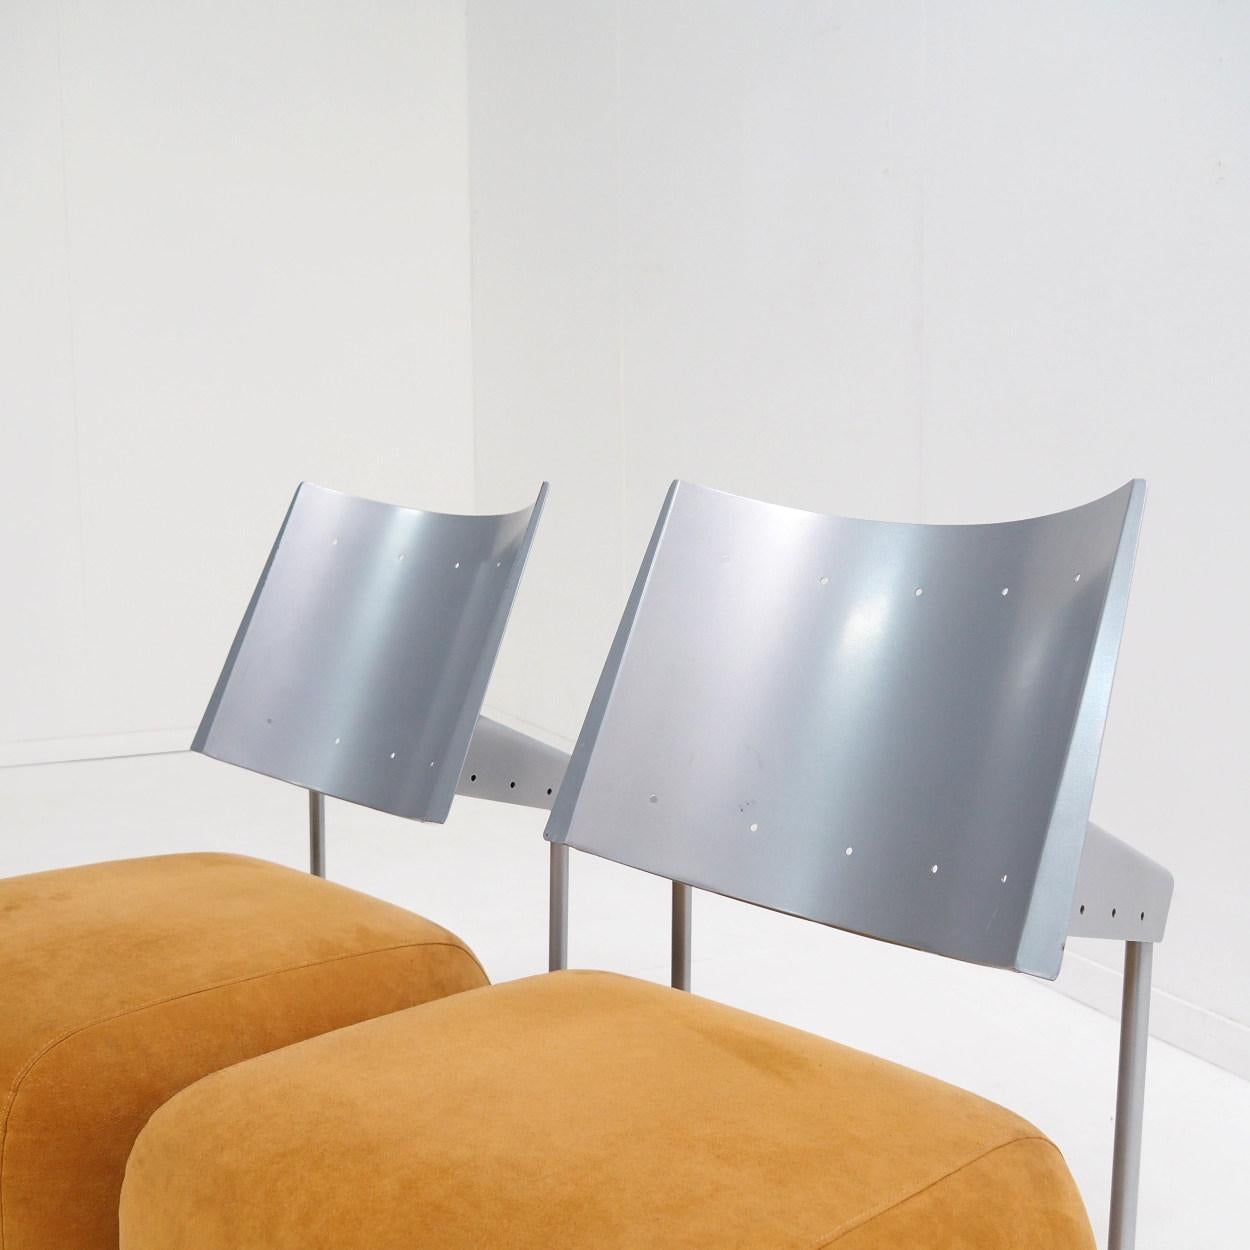 Metal ‘Oscar’ Chairs by Harri Korhonen for Inno Interior Oy, Finnish